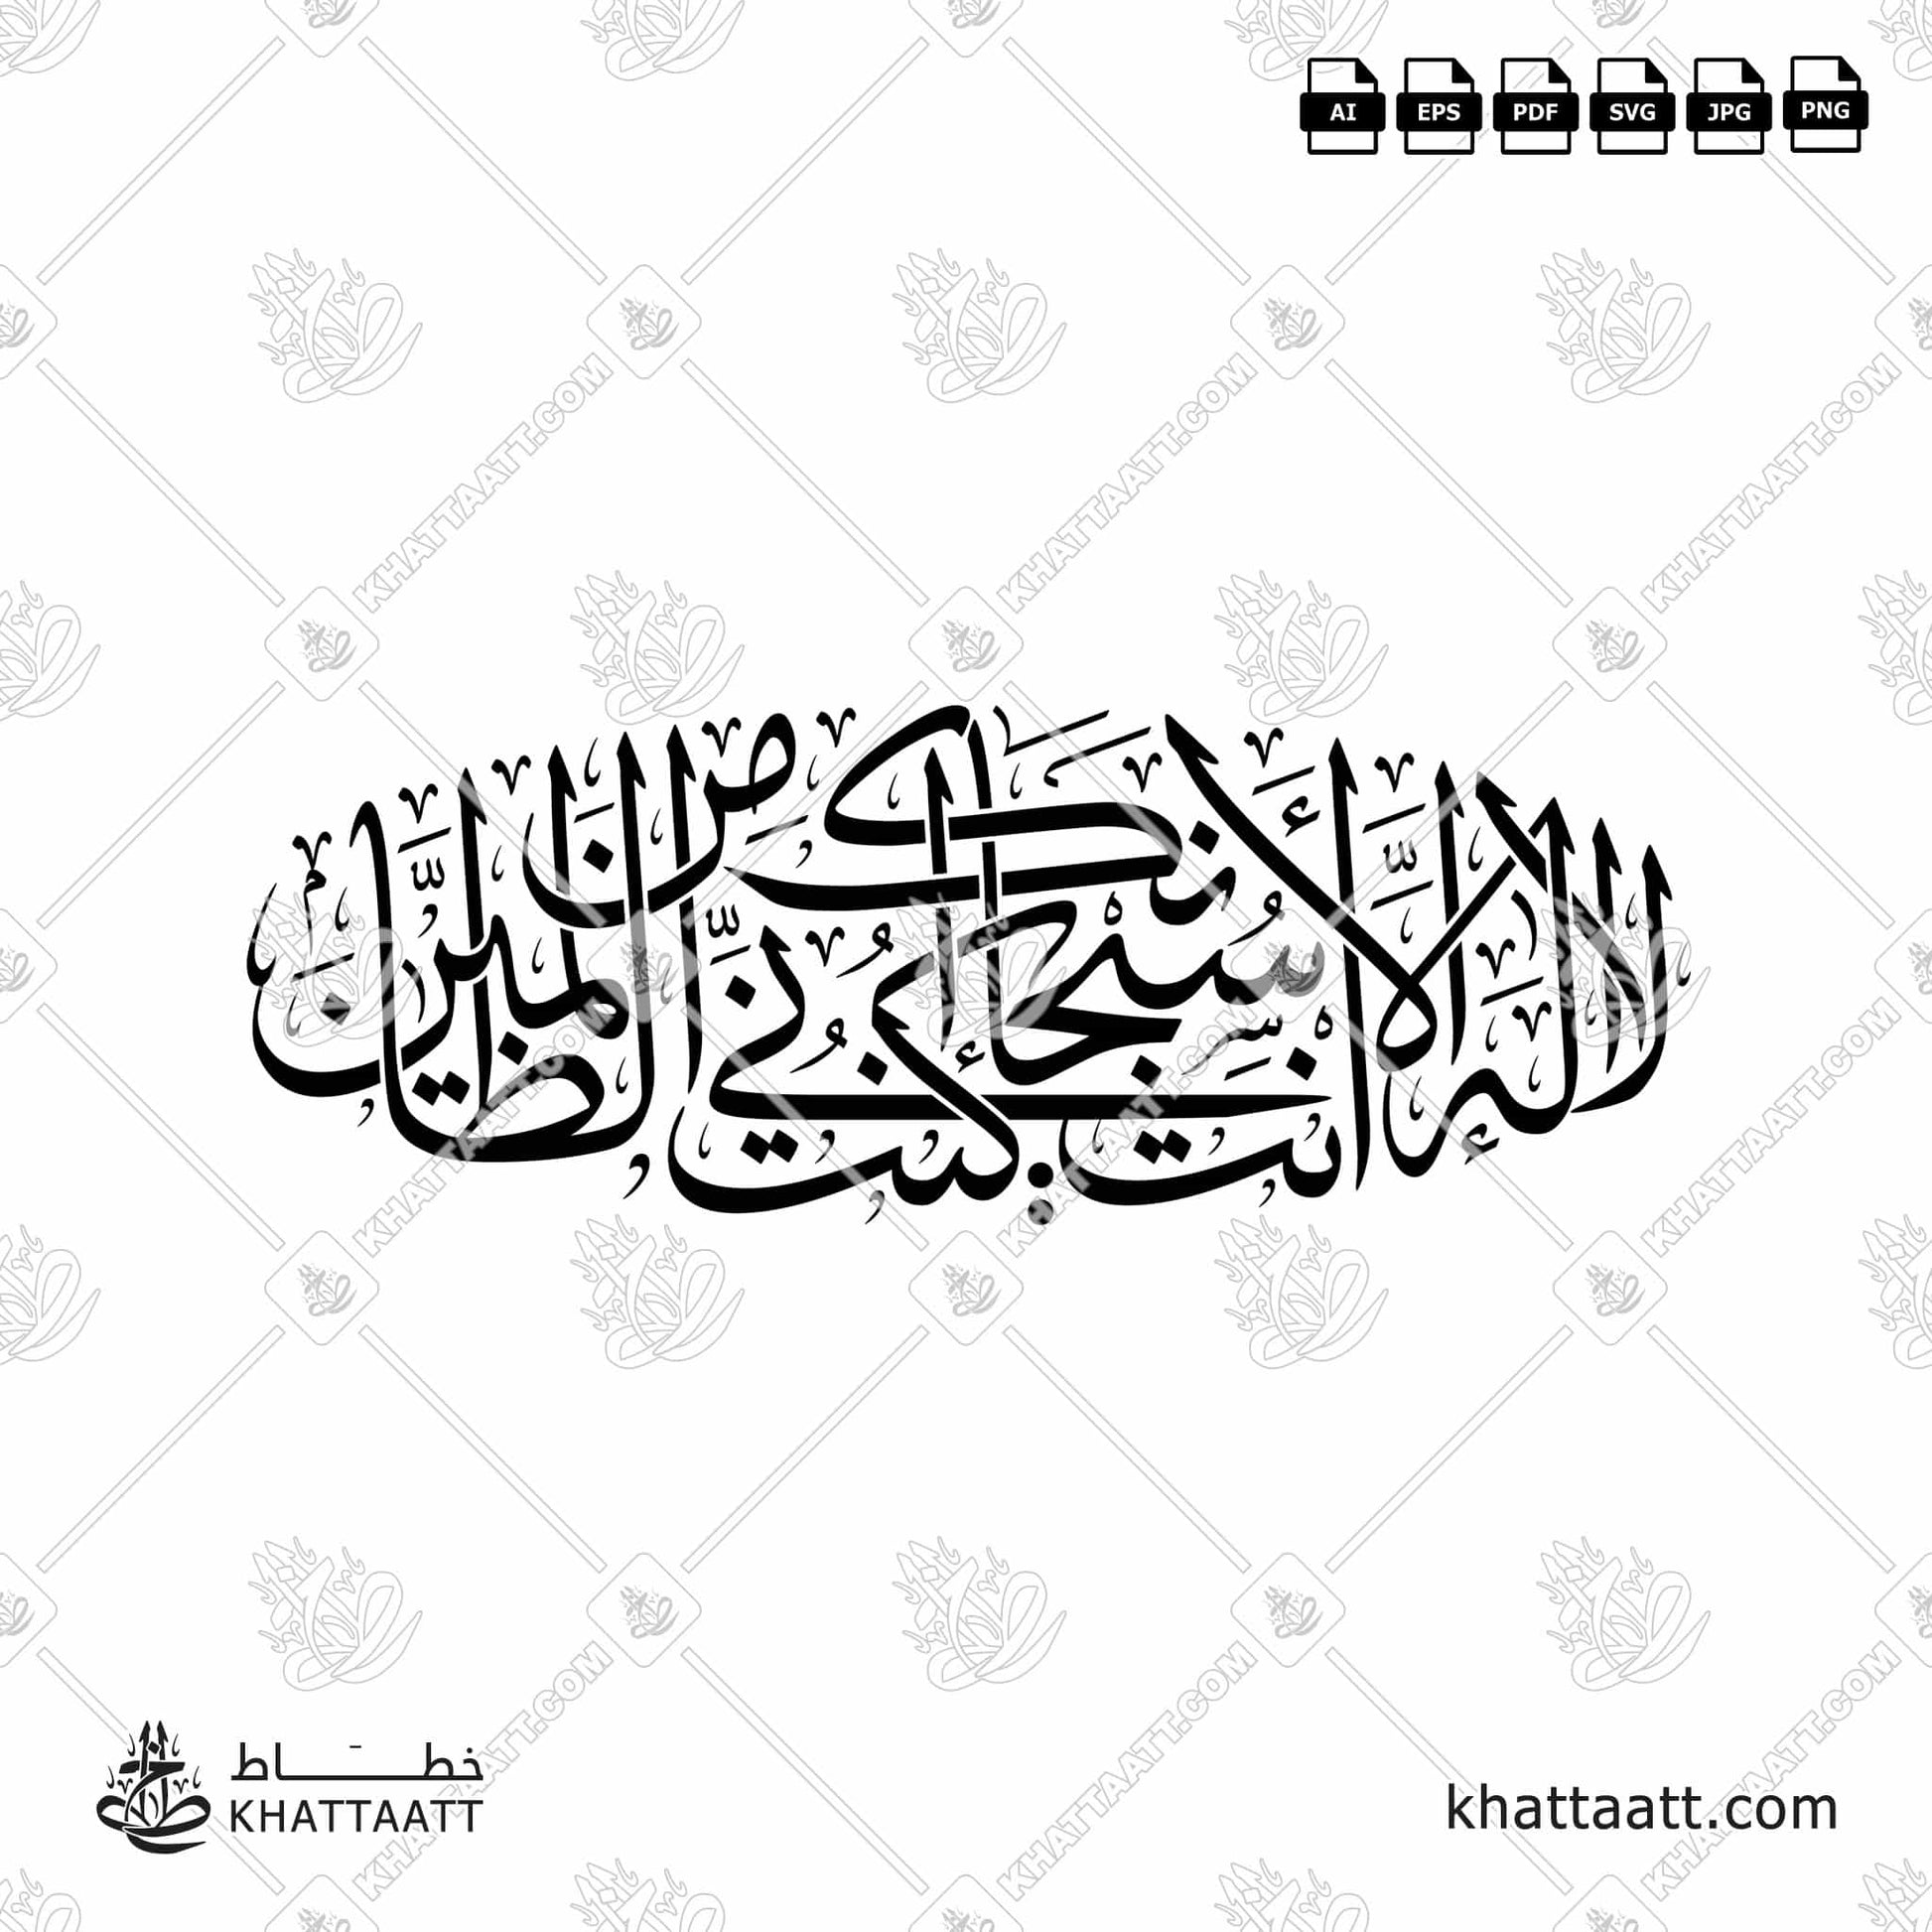 Download Arabic calligraphy تحميل مخطوطة خط عربي of لا إله إلا أنت سبحانك إني كنت من الظالمين (T022) Thuluth - خط الثلث in vector فيكتور and png